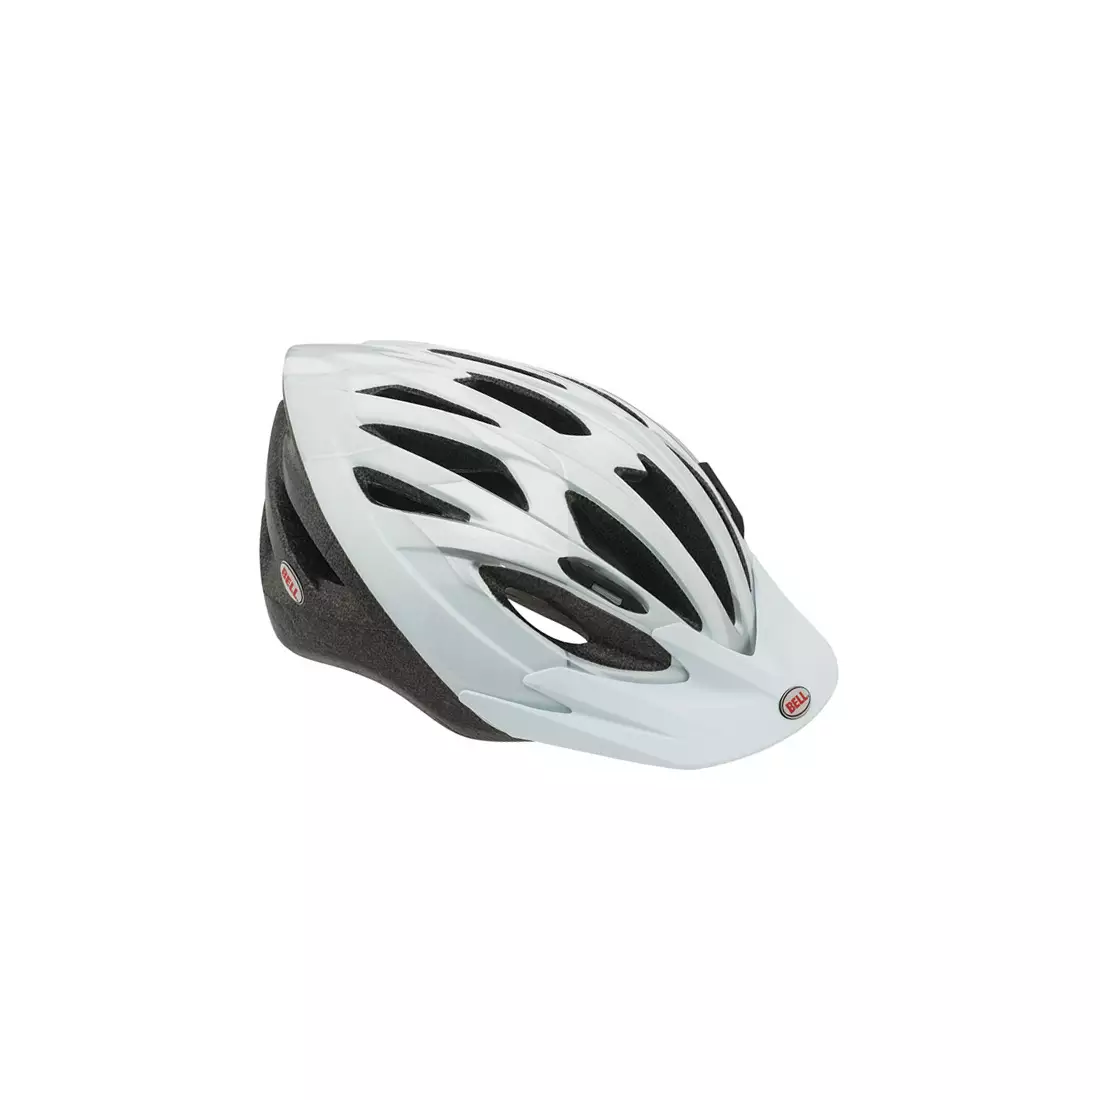 BELL PRESIDIO - cyklistická přilba, bílá a stříbrná / roztahaná